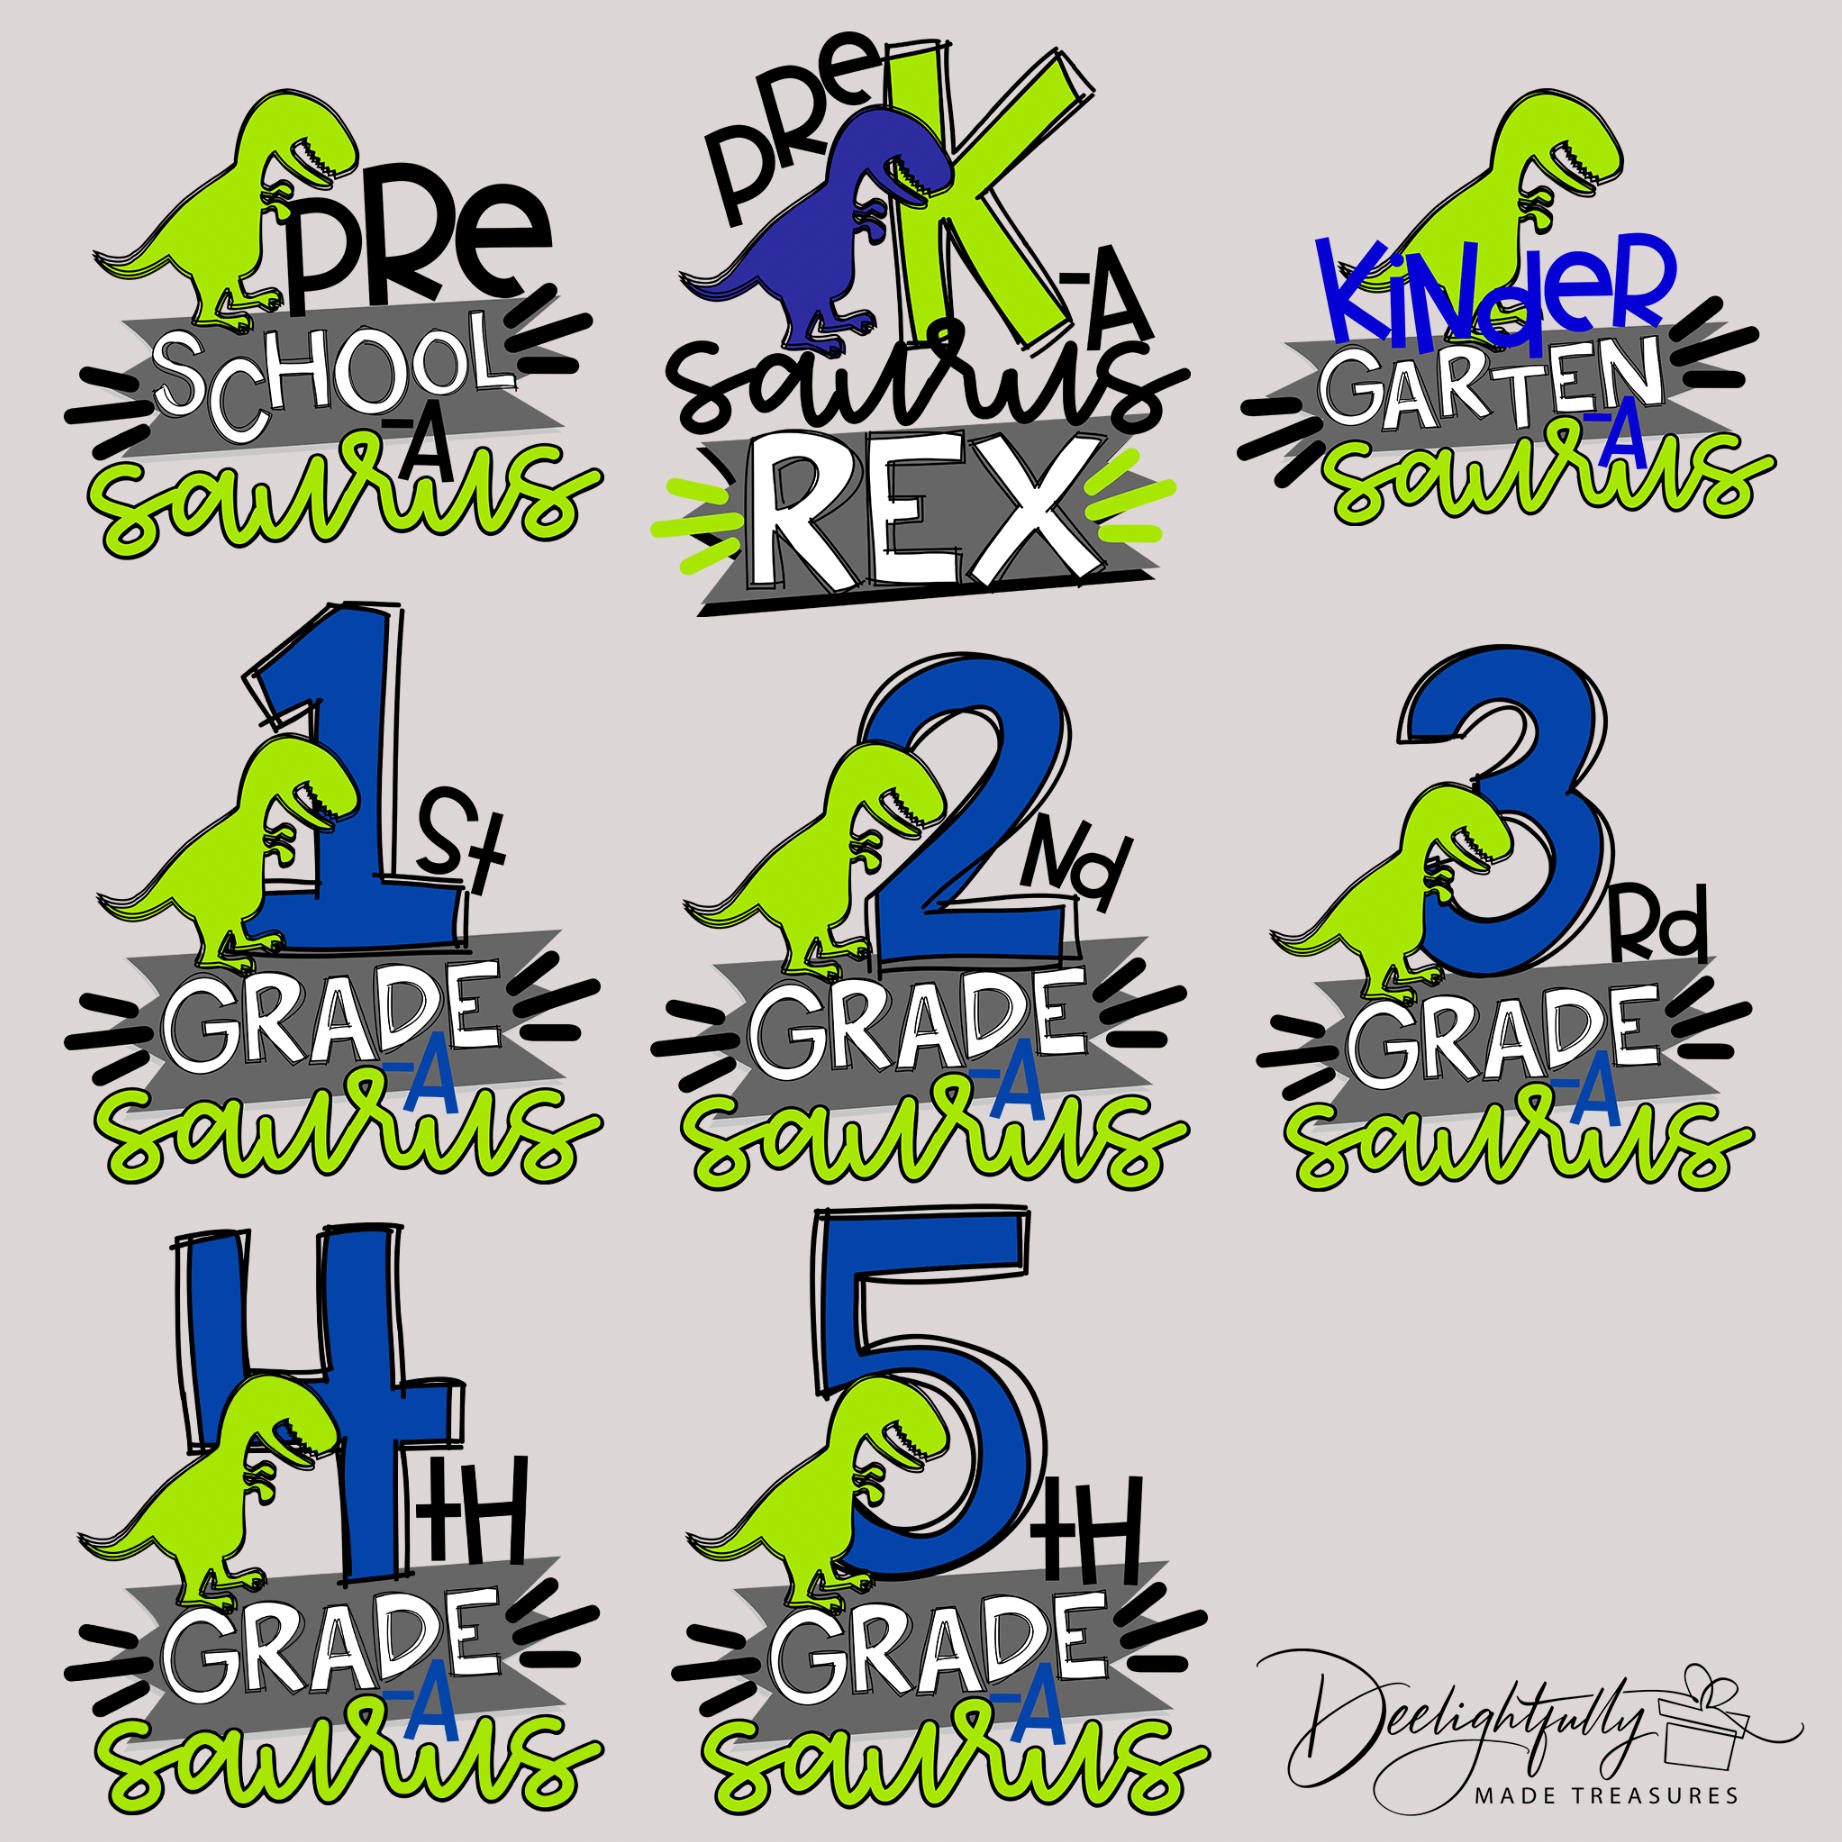 Available school grade designs: pre-school, pre-K, kindergarten, 1st grade, 2nd grade, 3rd grade, 4th grade and 5th grade